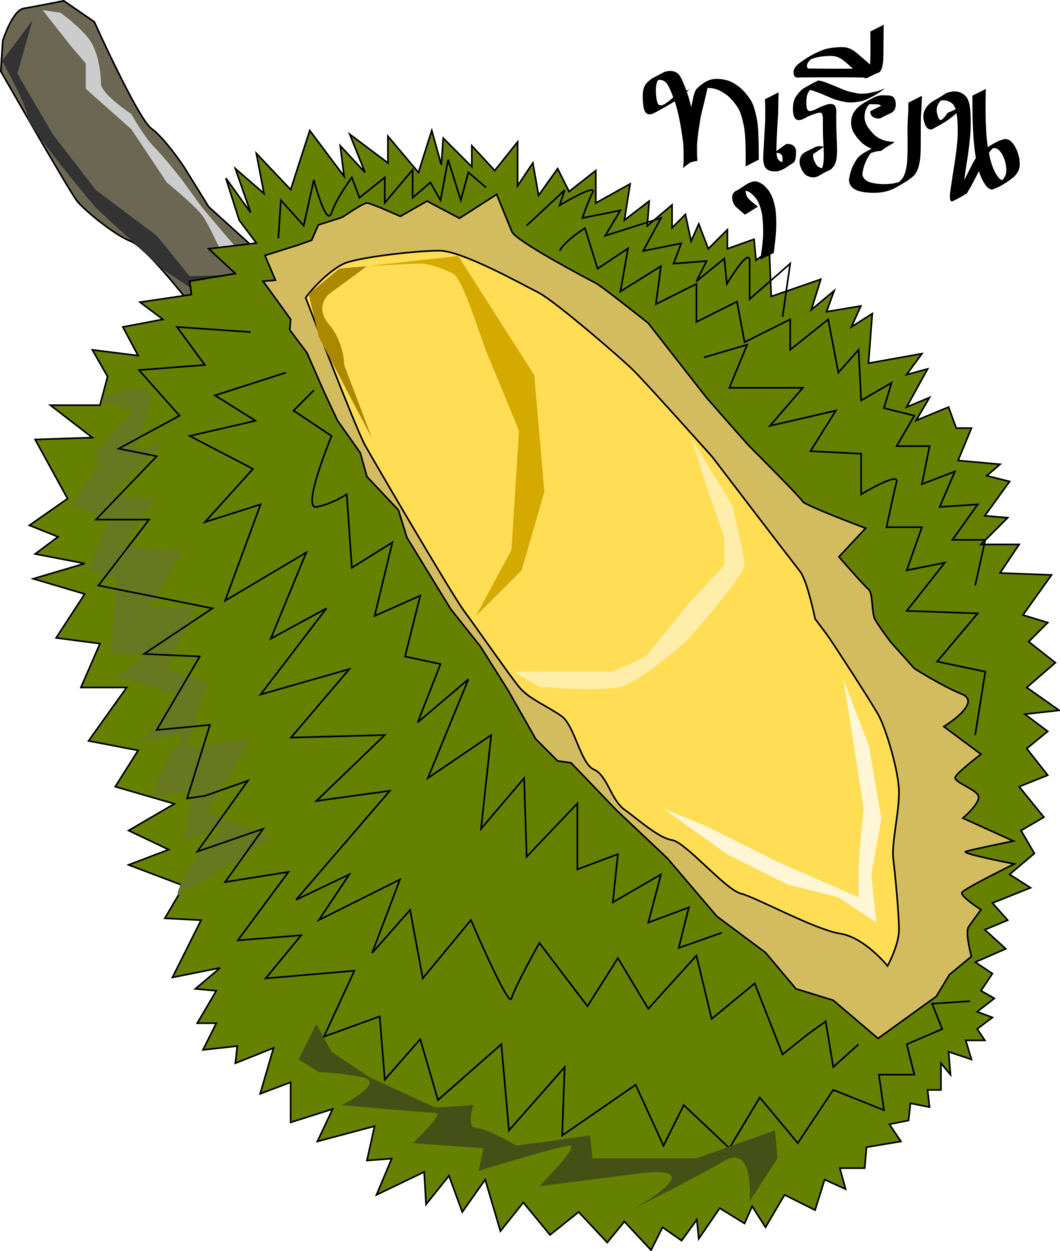 A Cartoon Of A Durian